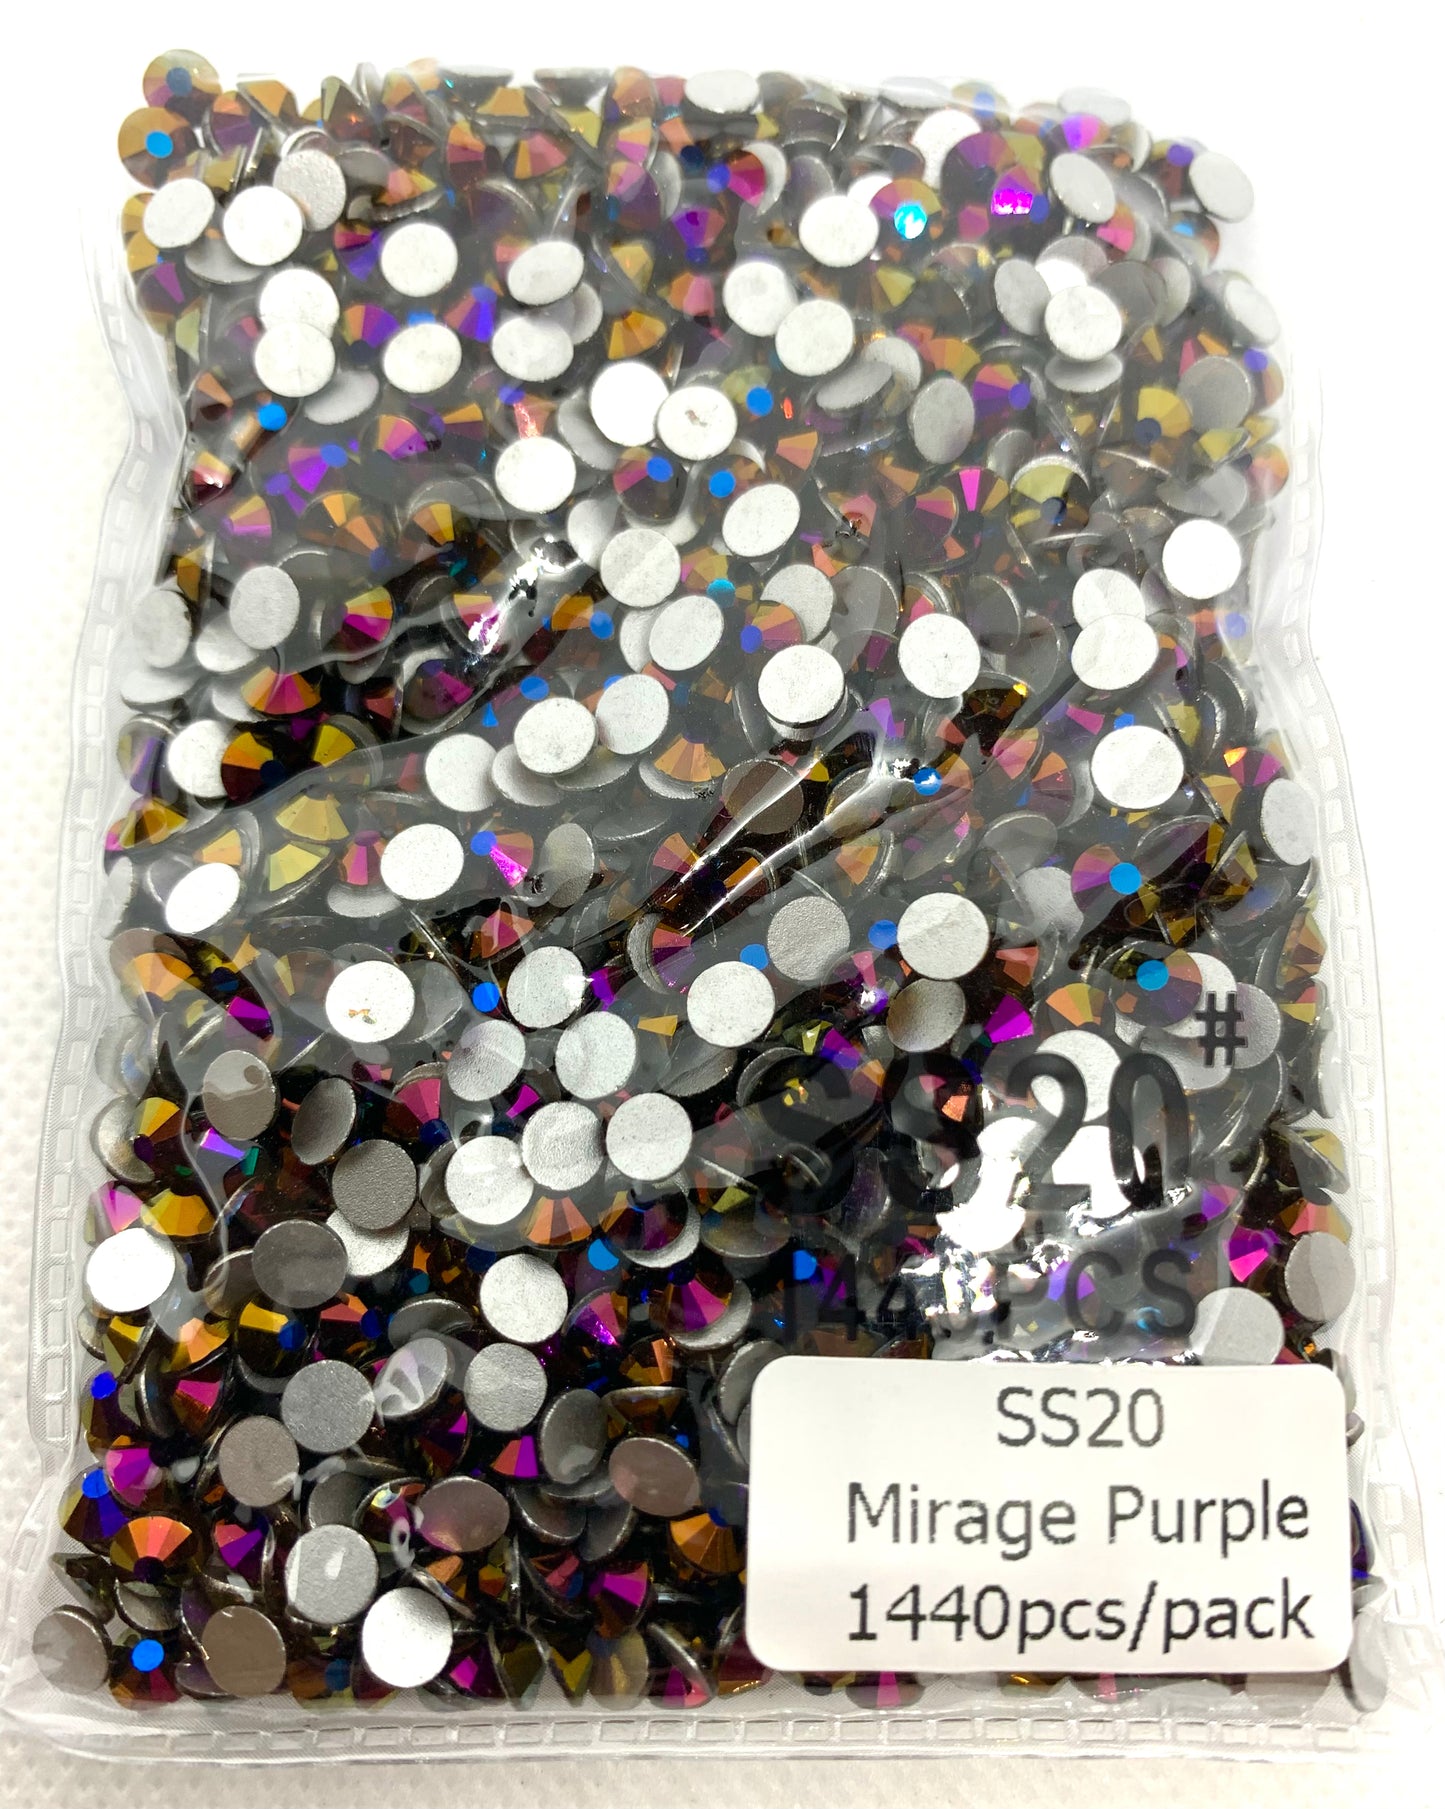 Mirage Purple